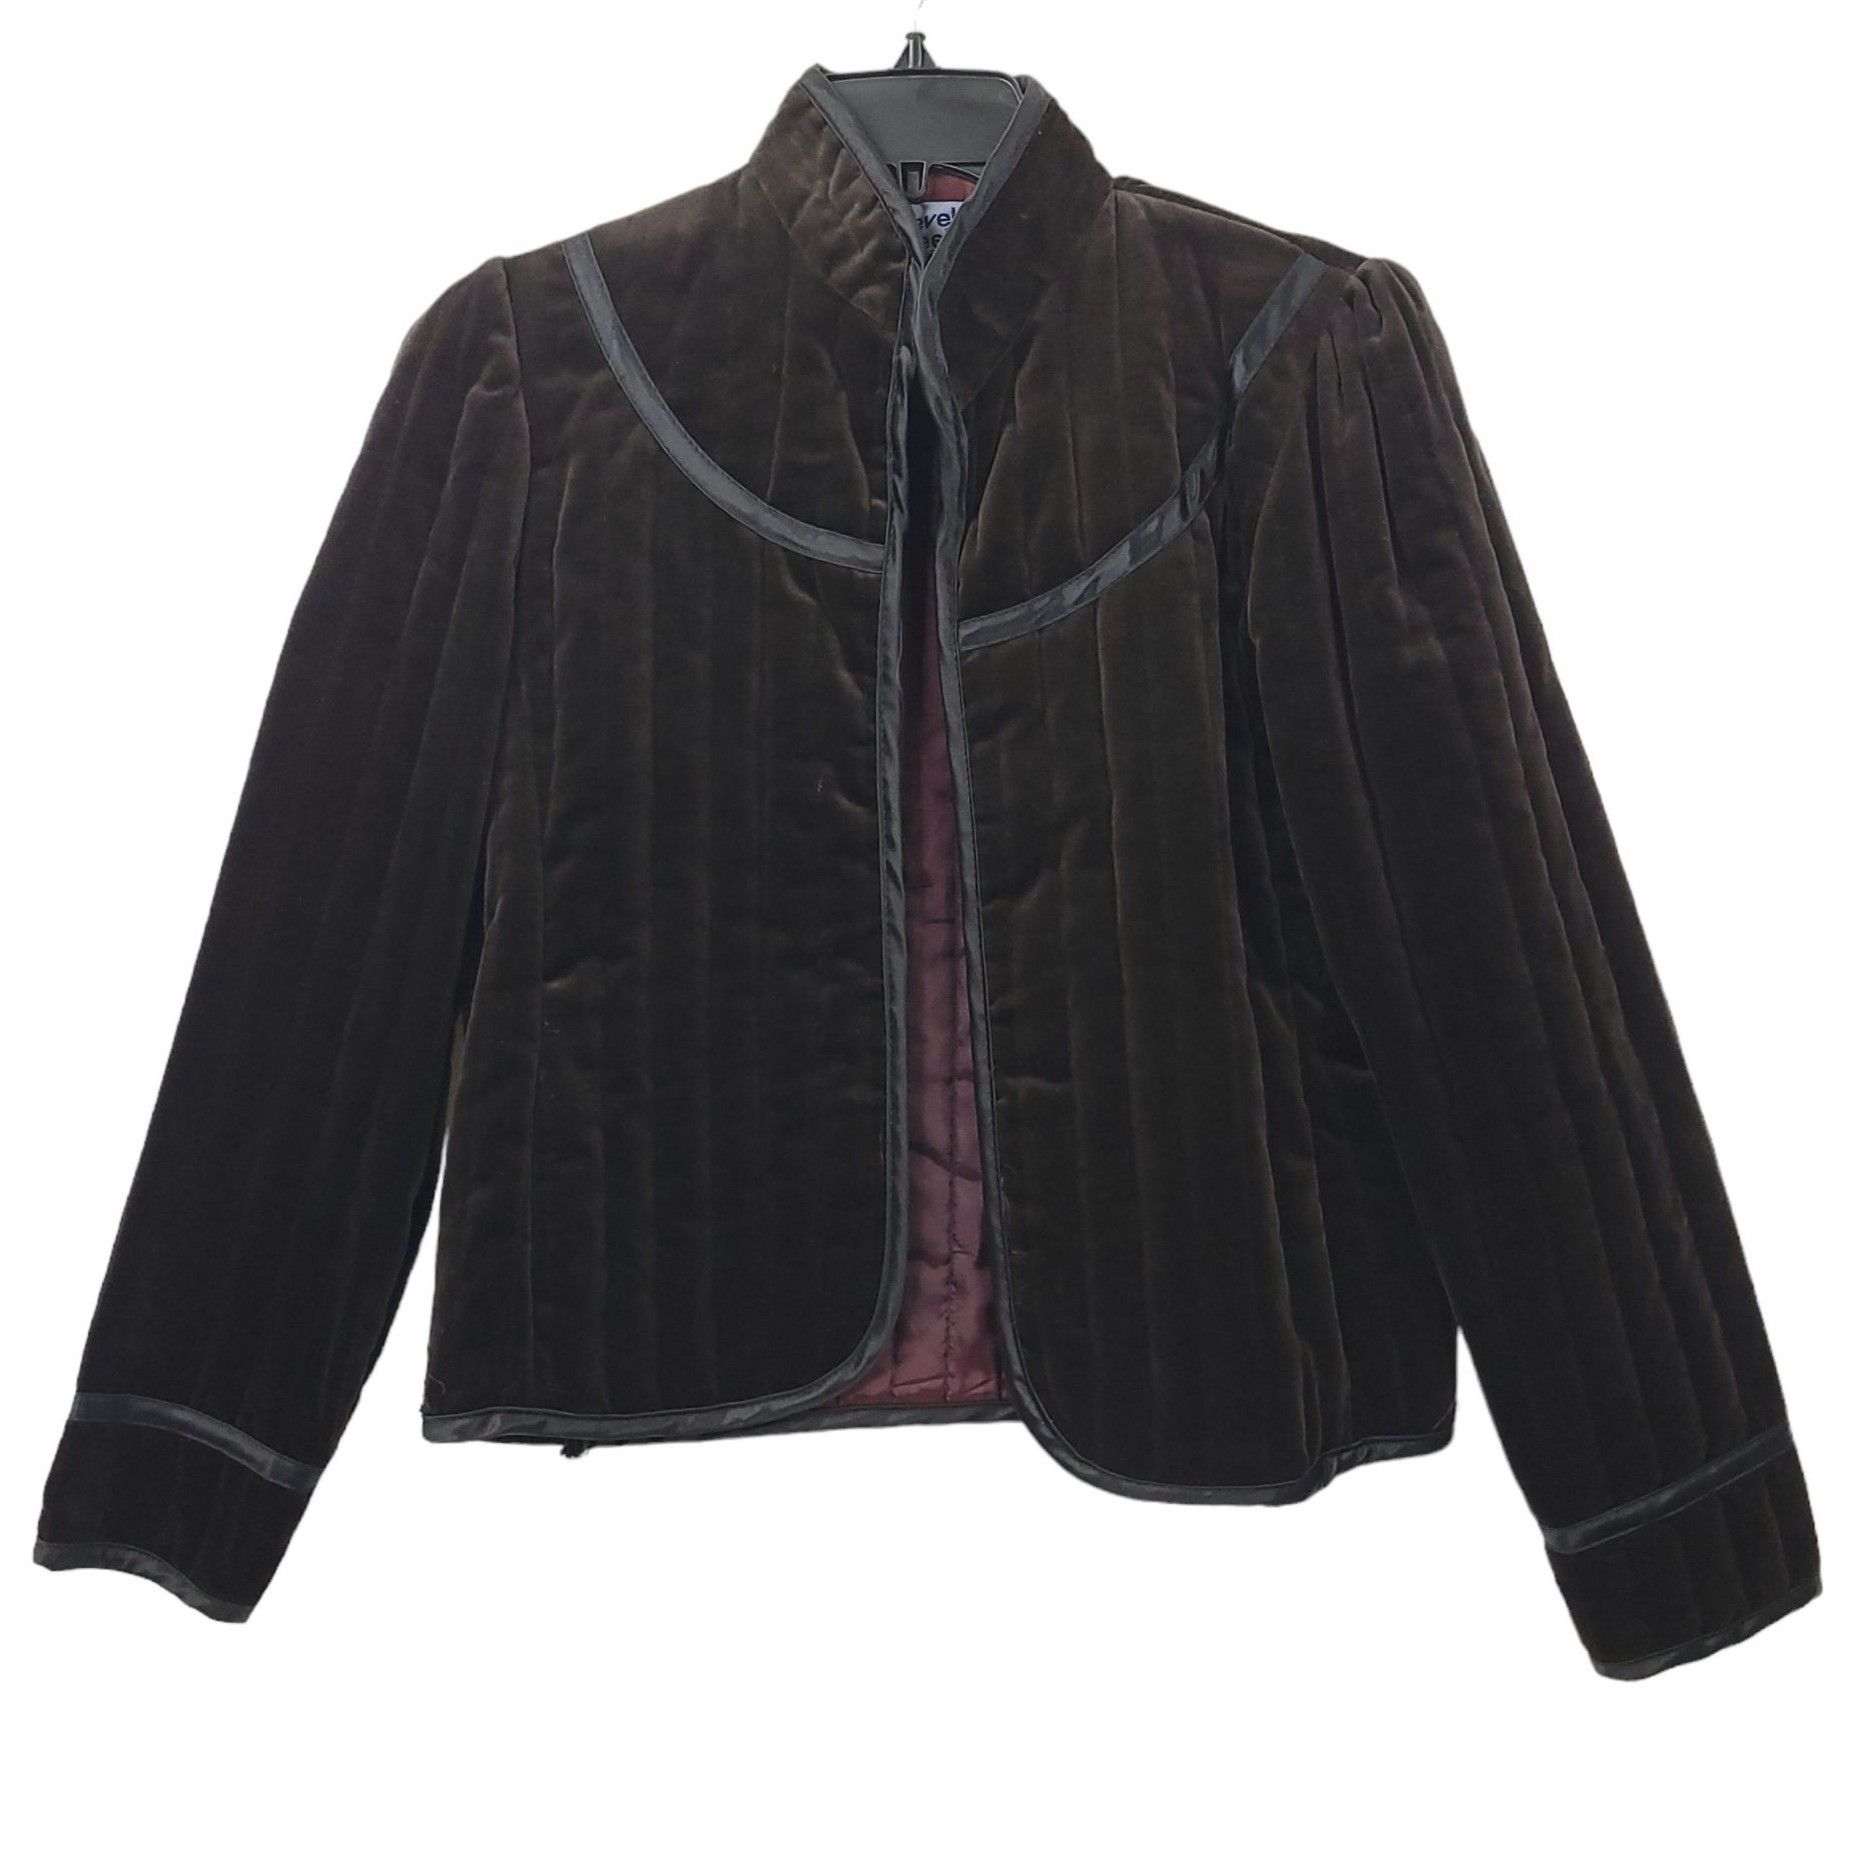 Bagatelle Jacket Plaid NWT Size Medium Gray Nova check Black